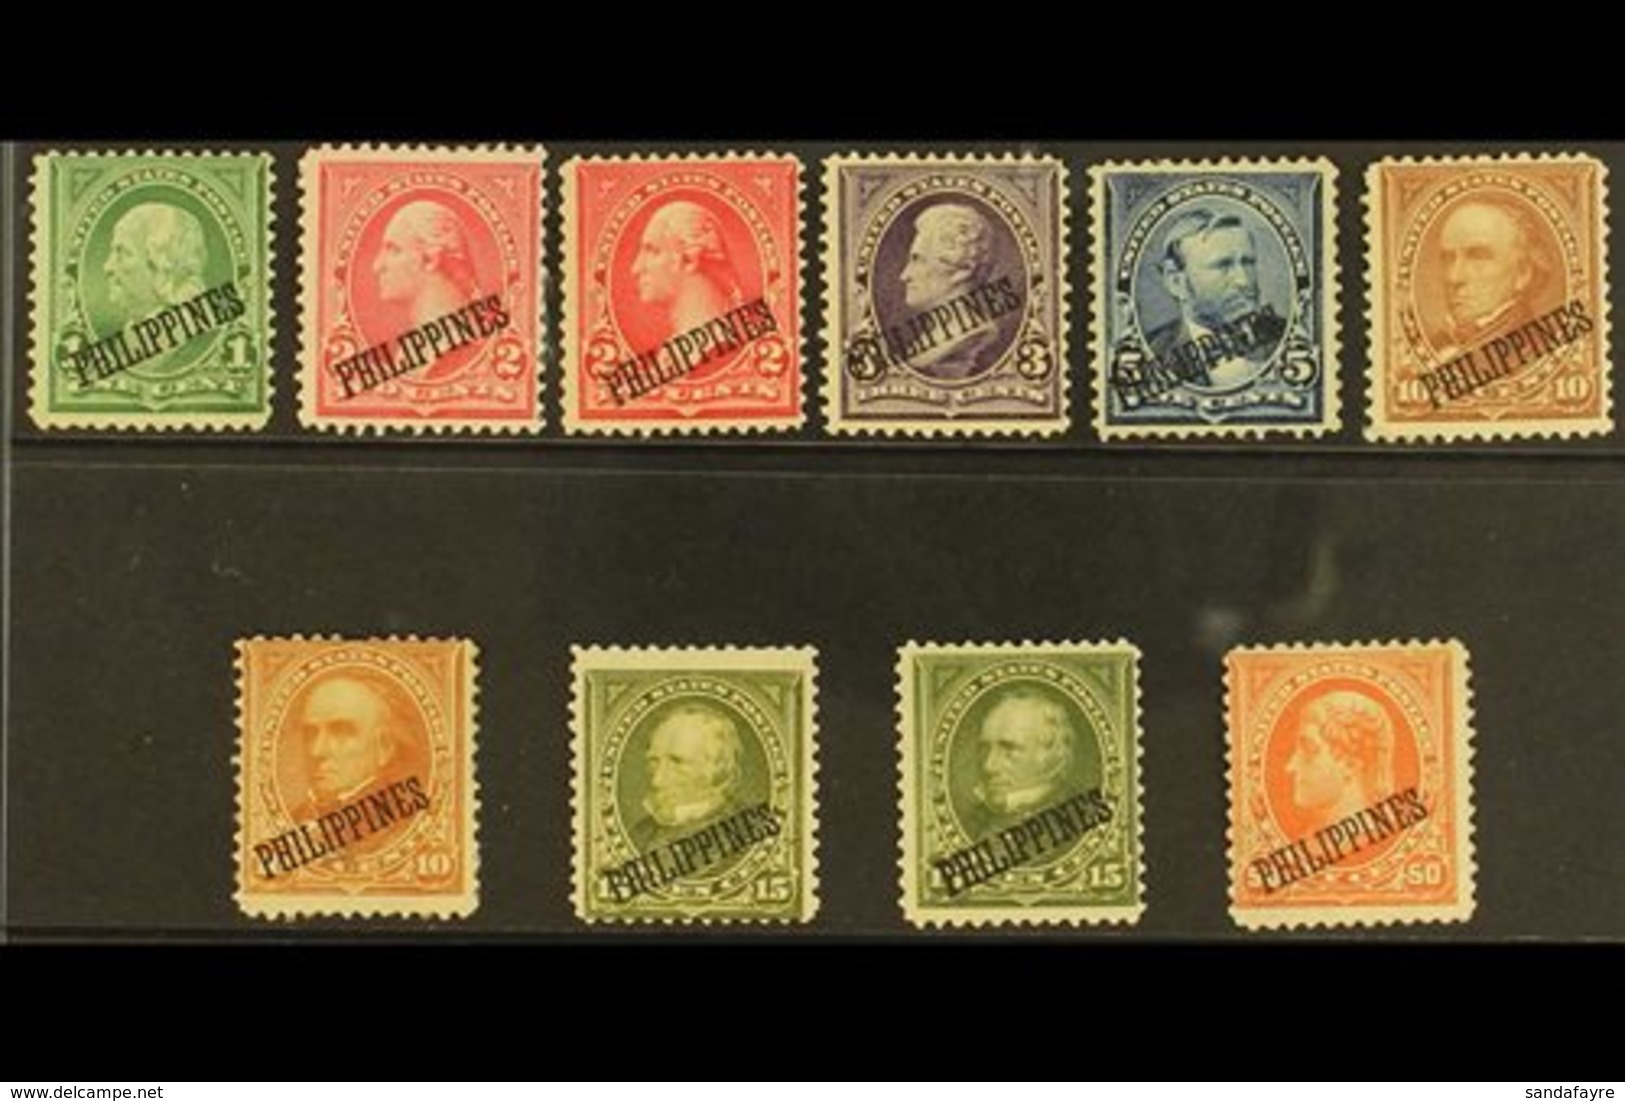 1899 Mint/unused Value To 50c Orange Ovptd Philippines Incl 2c Shades, 10c Both Types, 15c Both Shades, Between Sc 213/2 - Philippinen